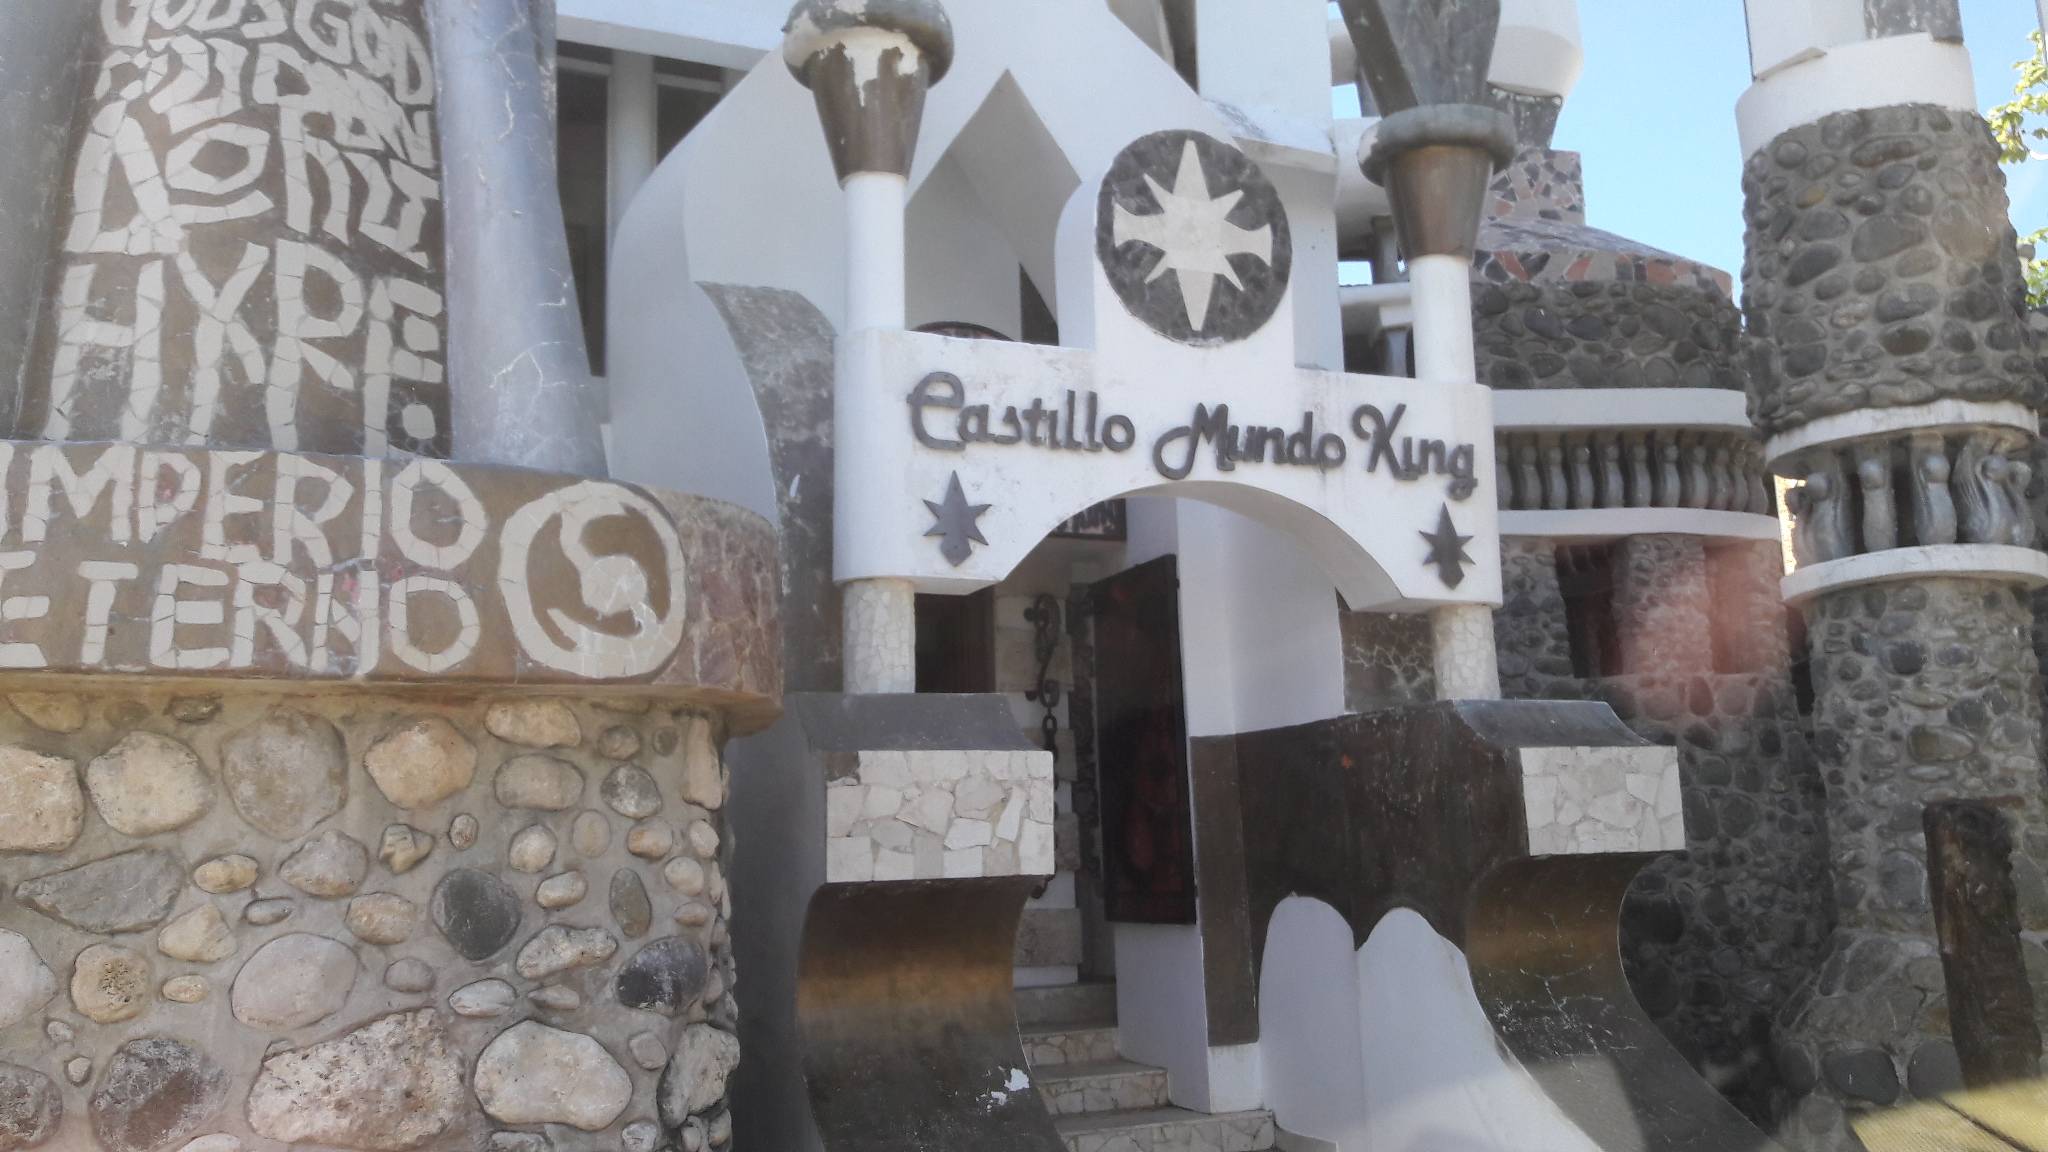 Castillo Mundo King - Strange but wonderful